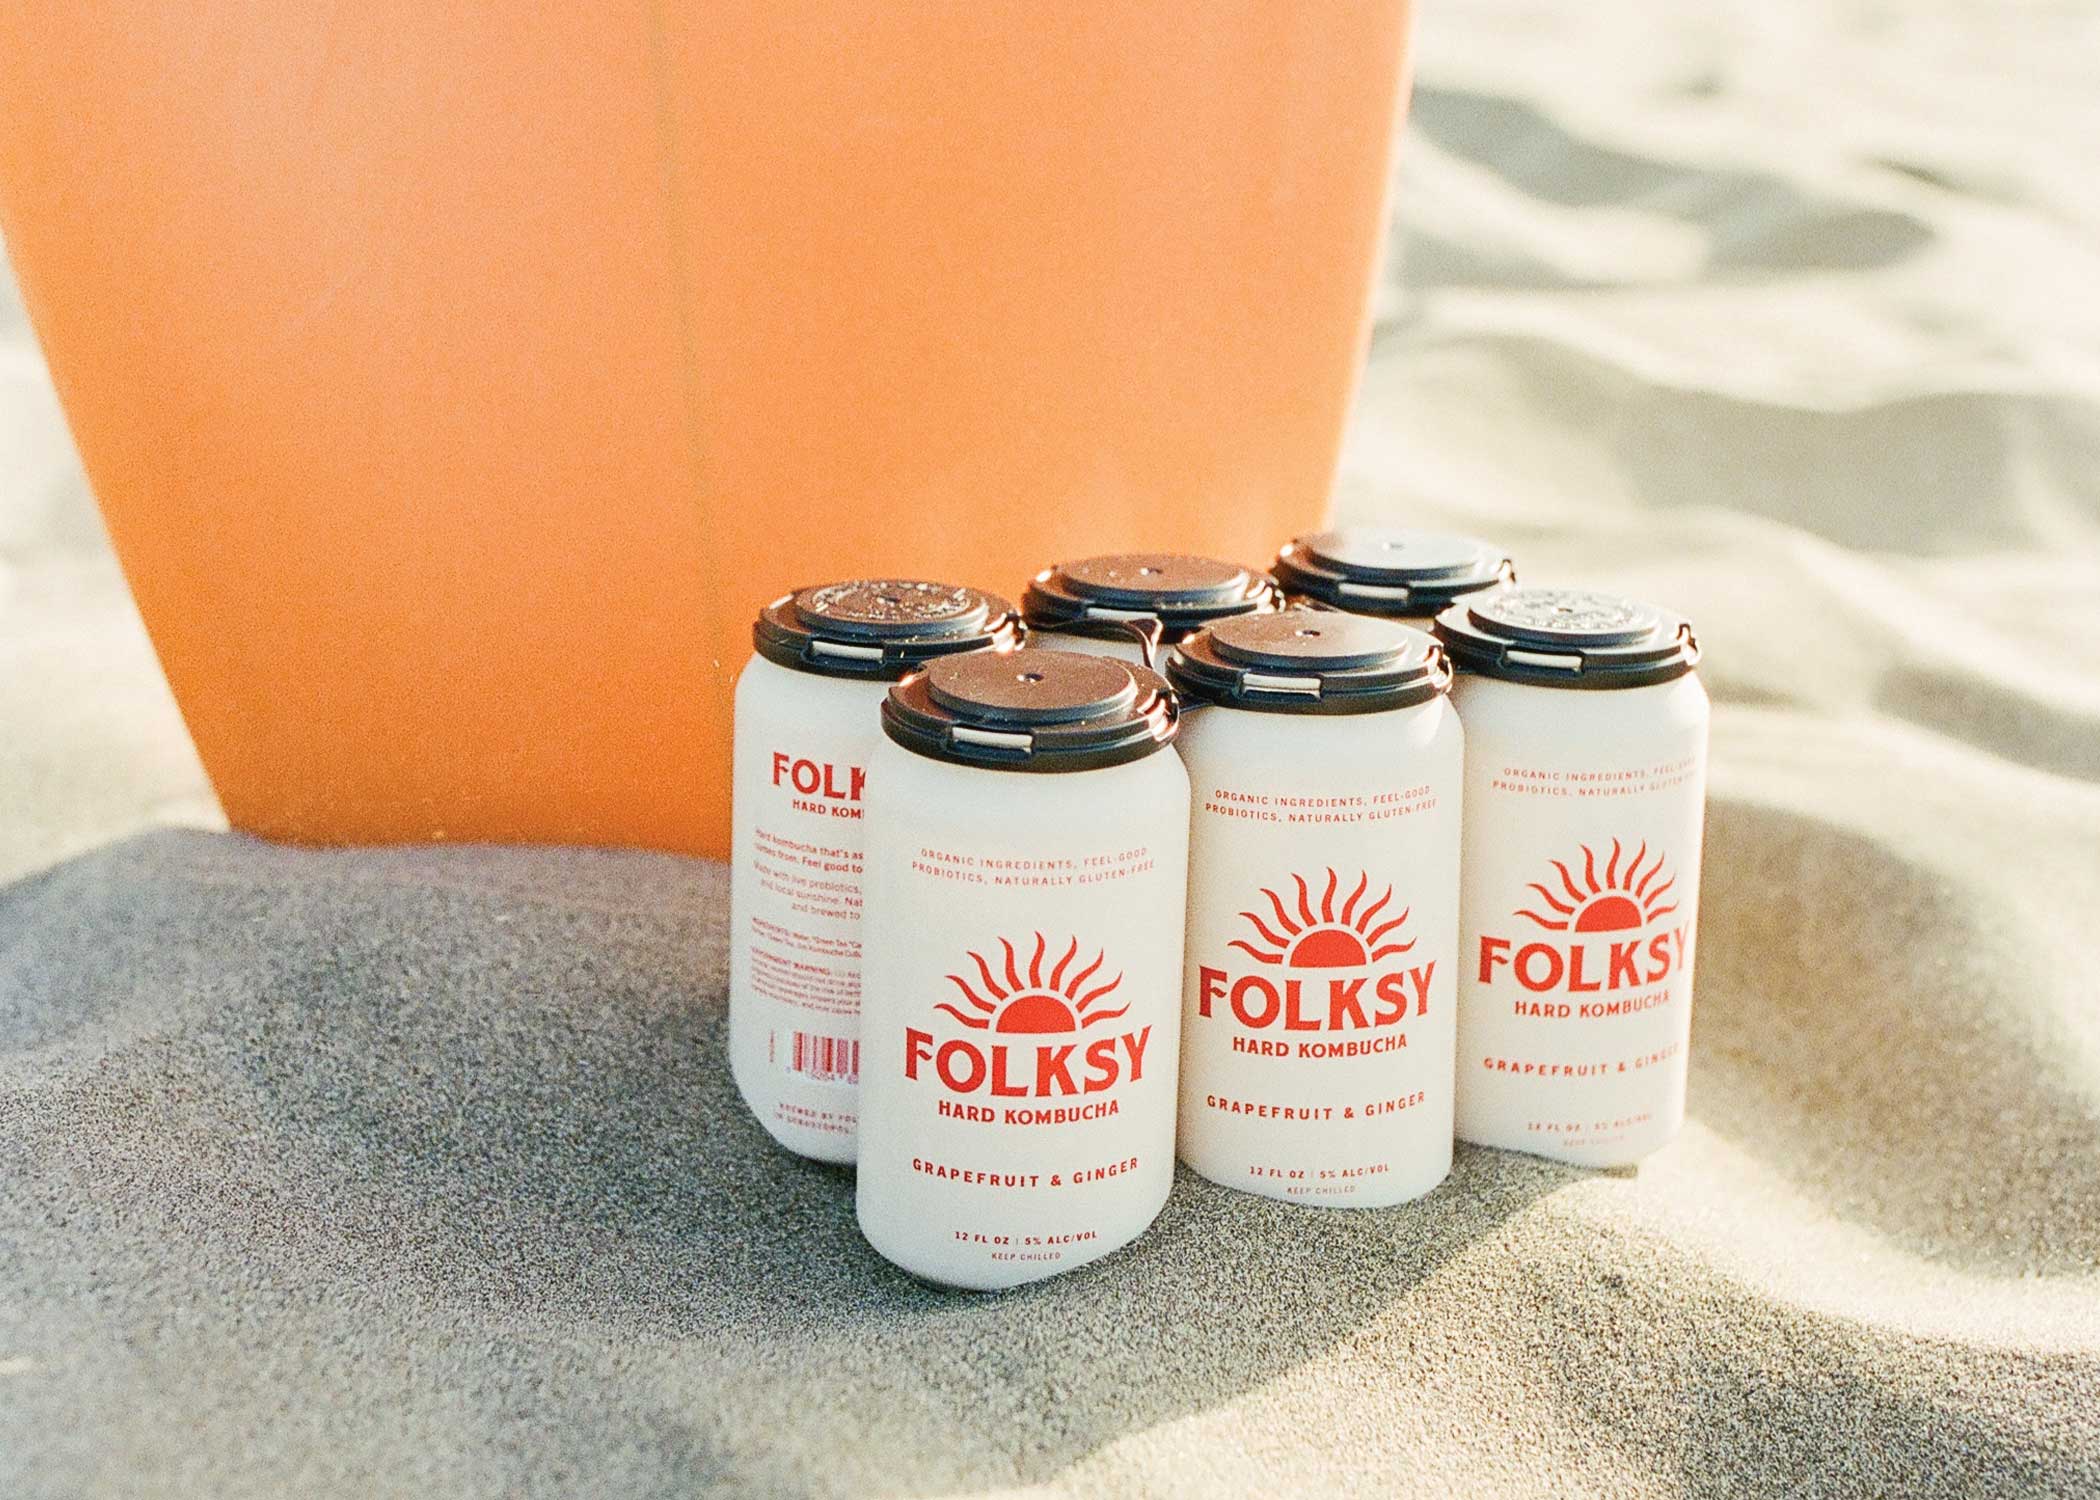 Folksy brand kombucha cans sitting on the sand